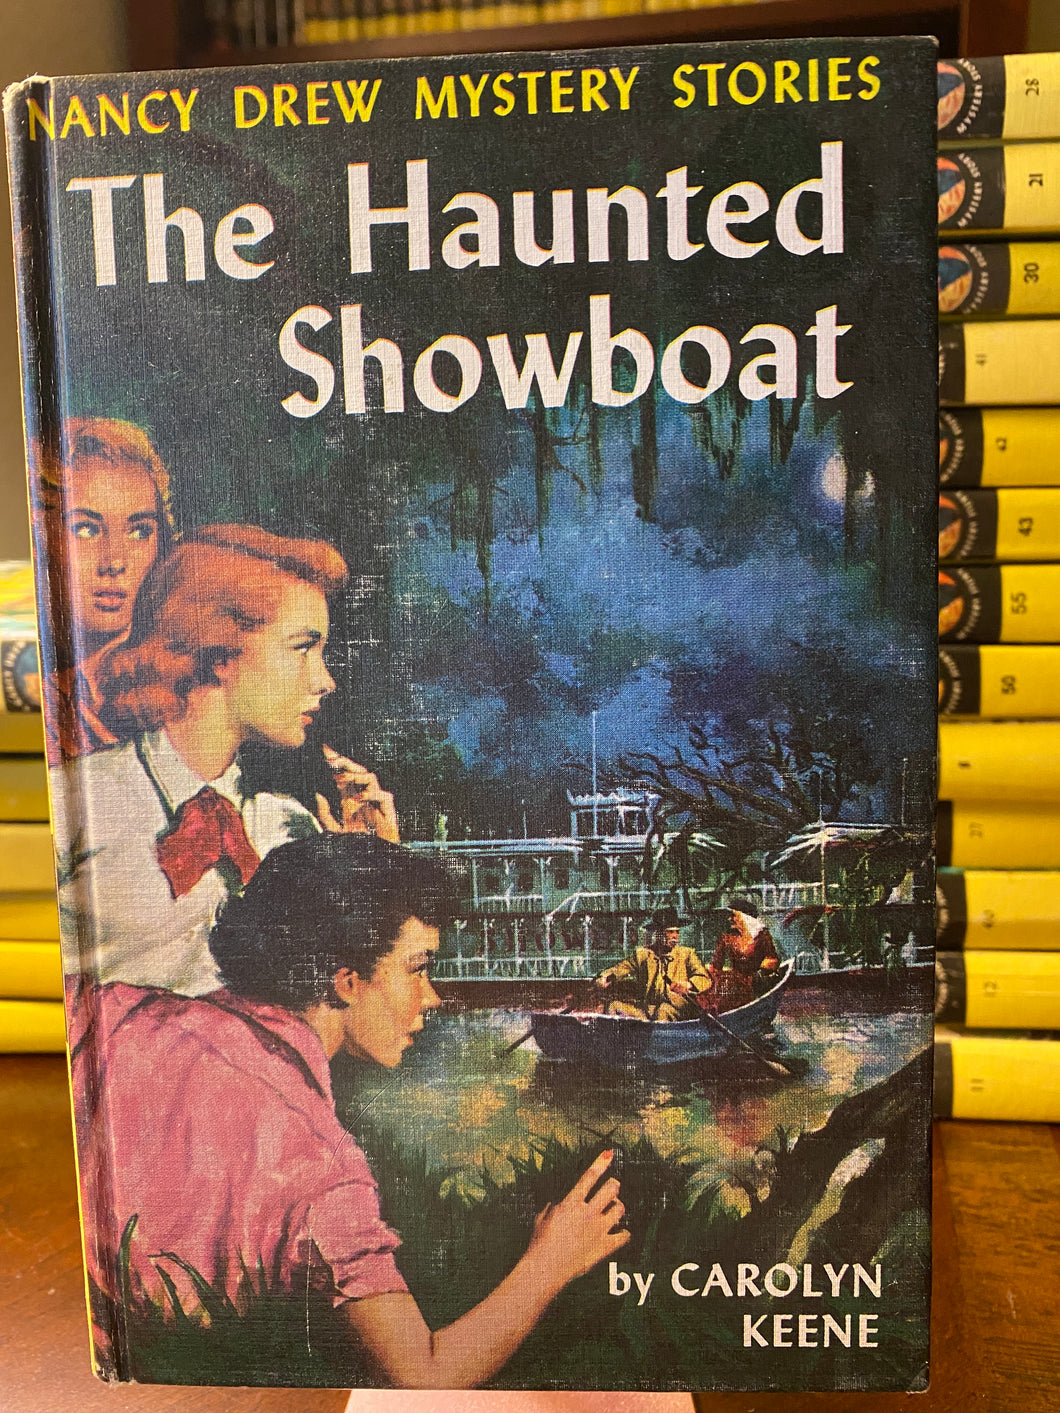 Vintage Nancy Drew Book The Haunted Showboat